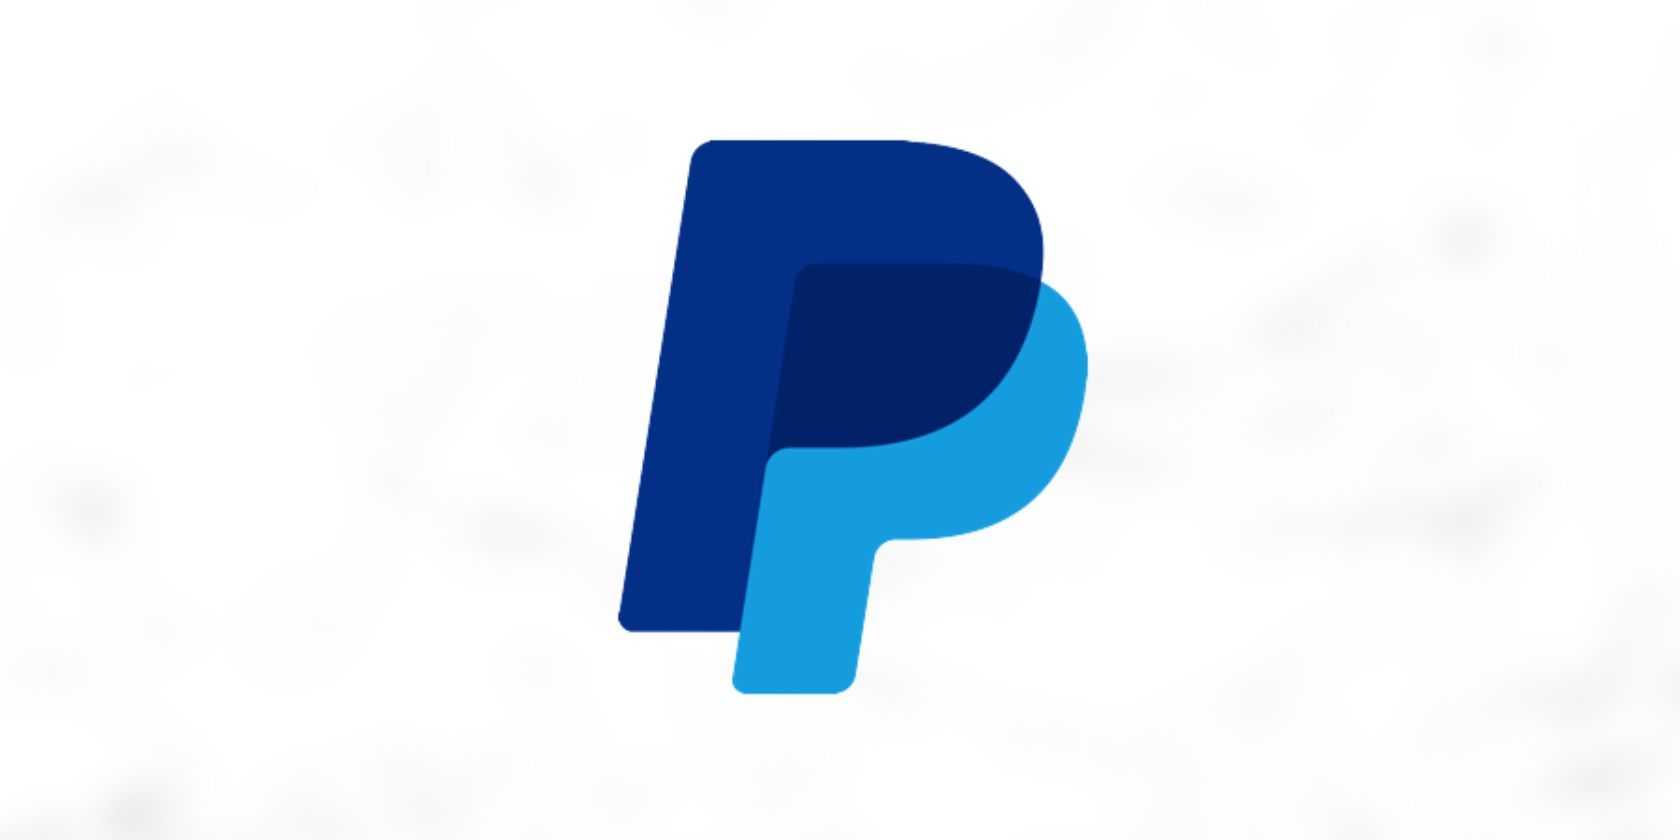 PayPal logo on white background 